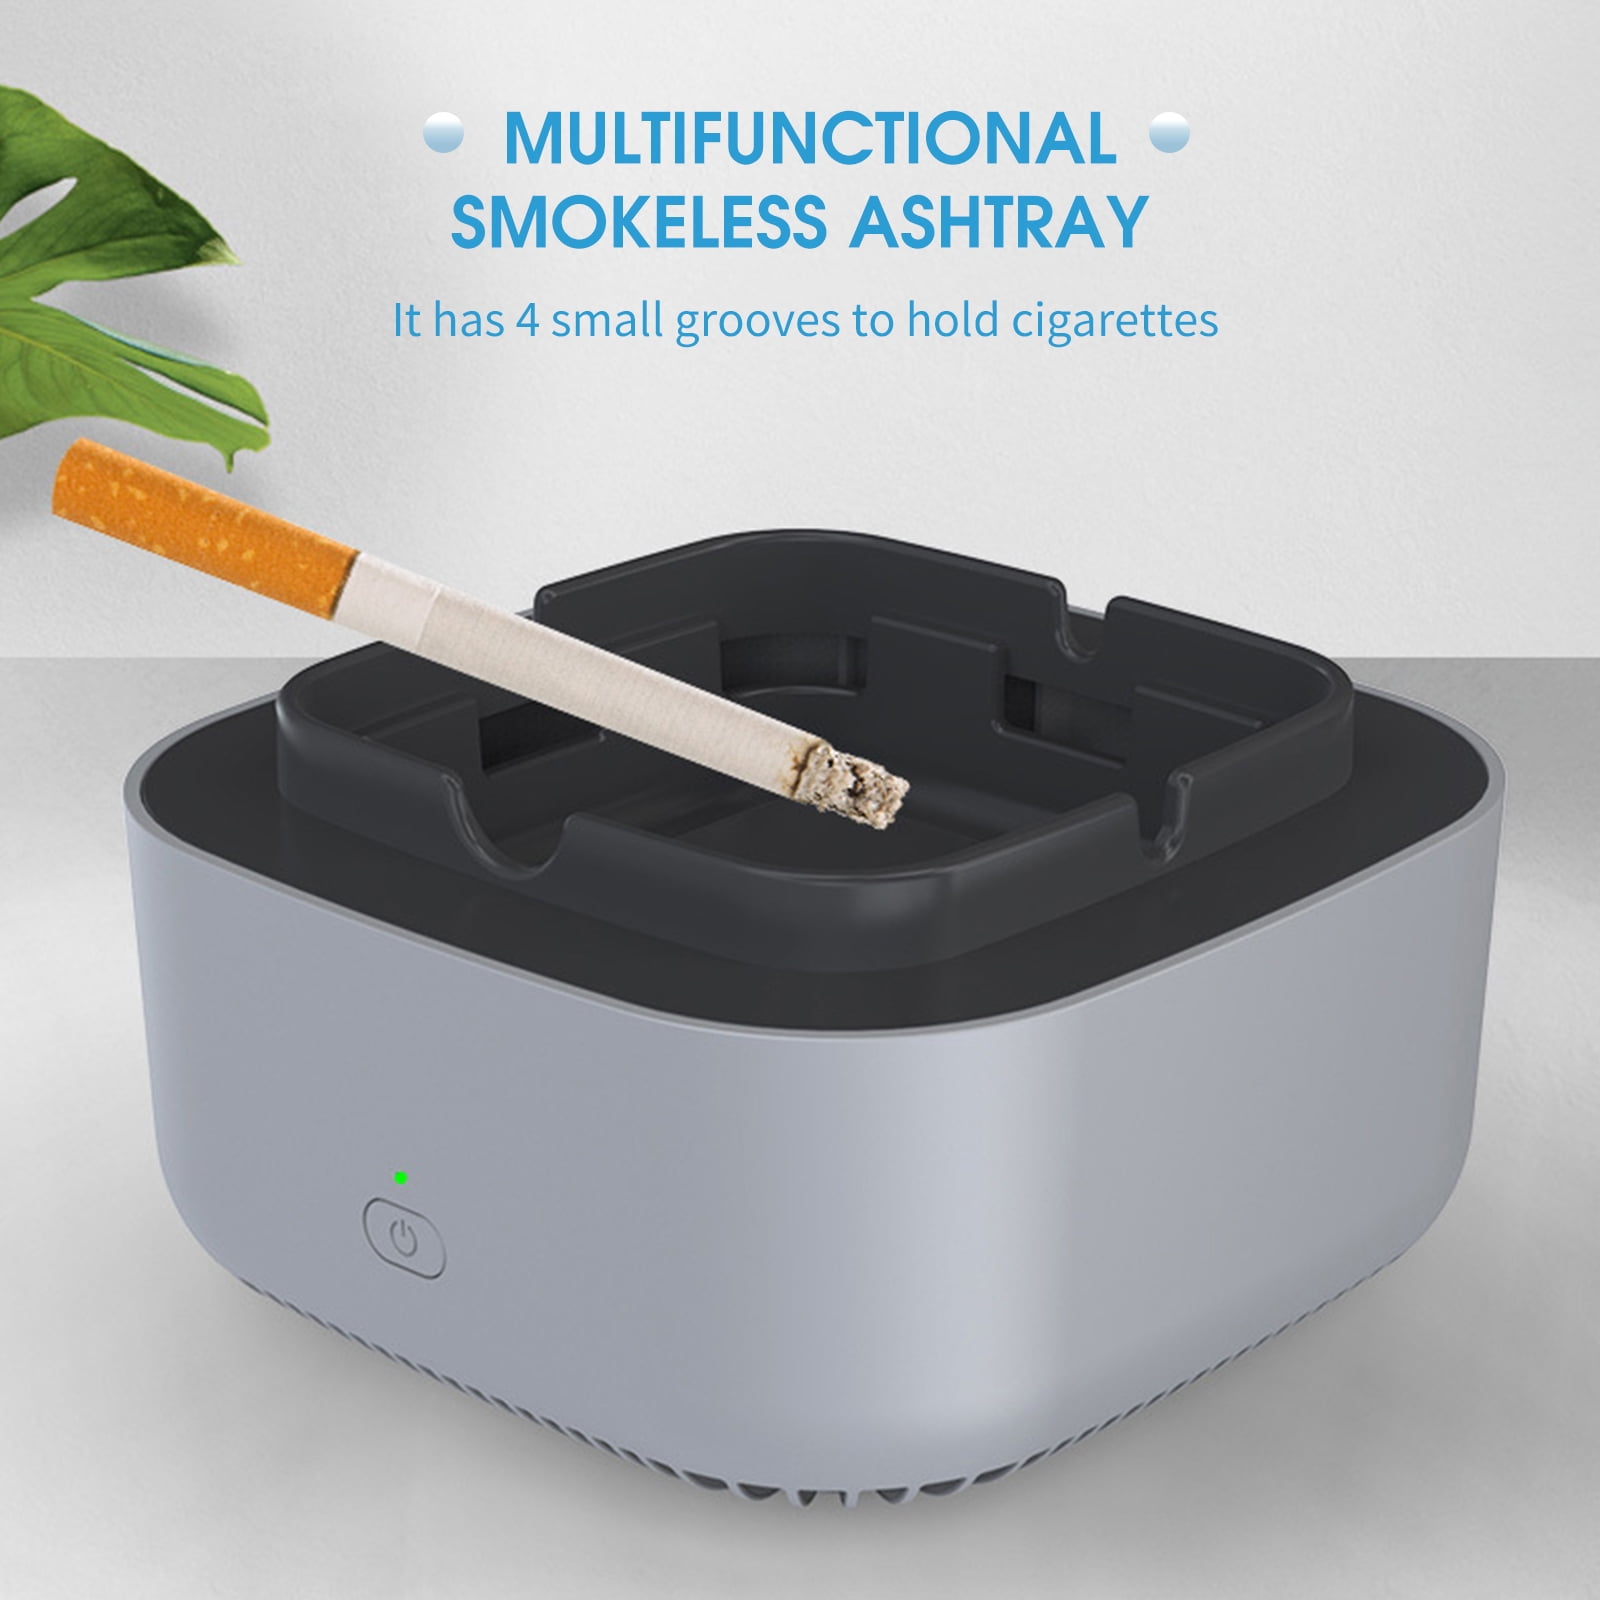 Multifunctional Smokeless Ashtray Negative Ion Air Fresher Smoke